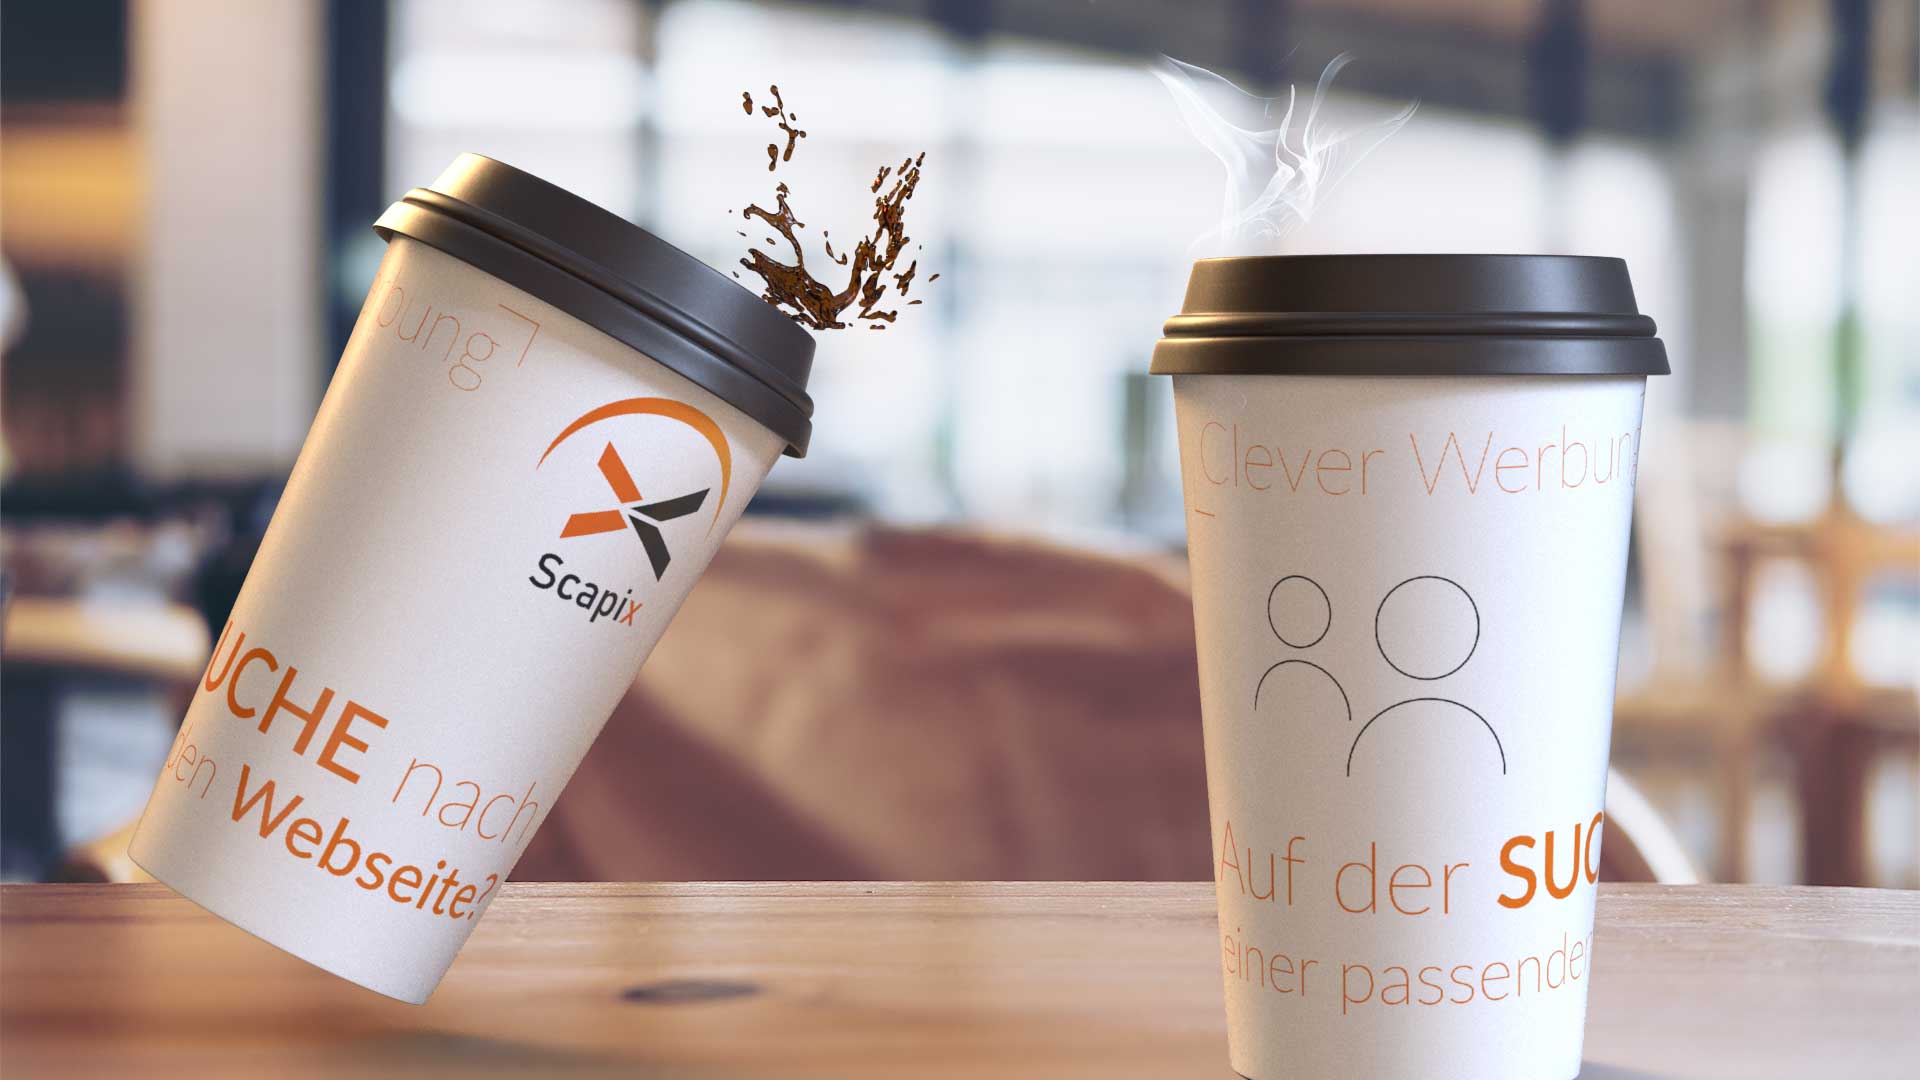 2 Kaffeebecher mit Scapix Webdesign Aufschrift